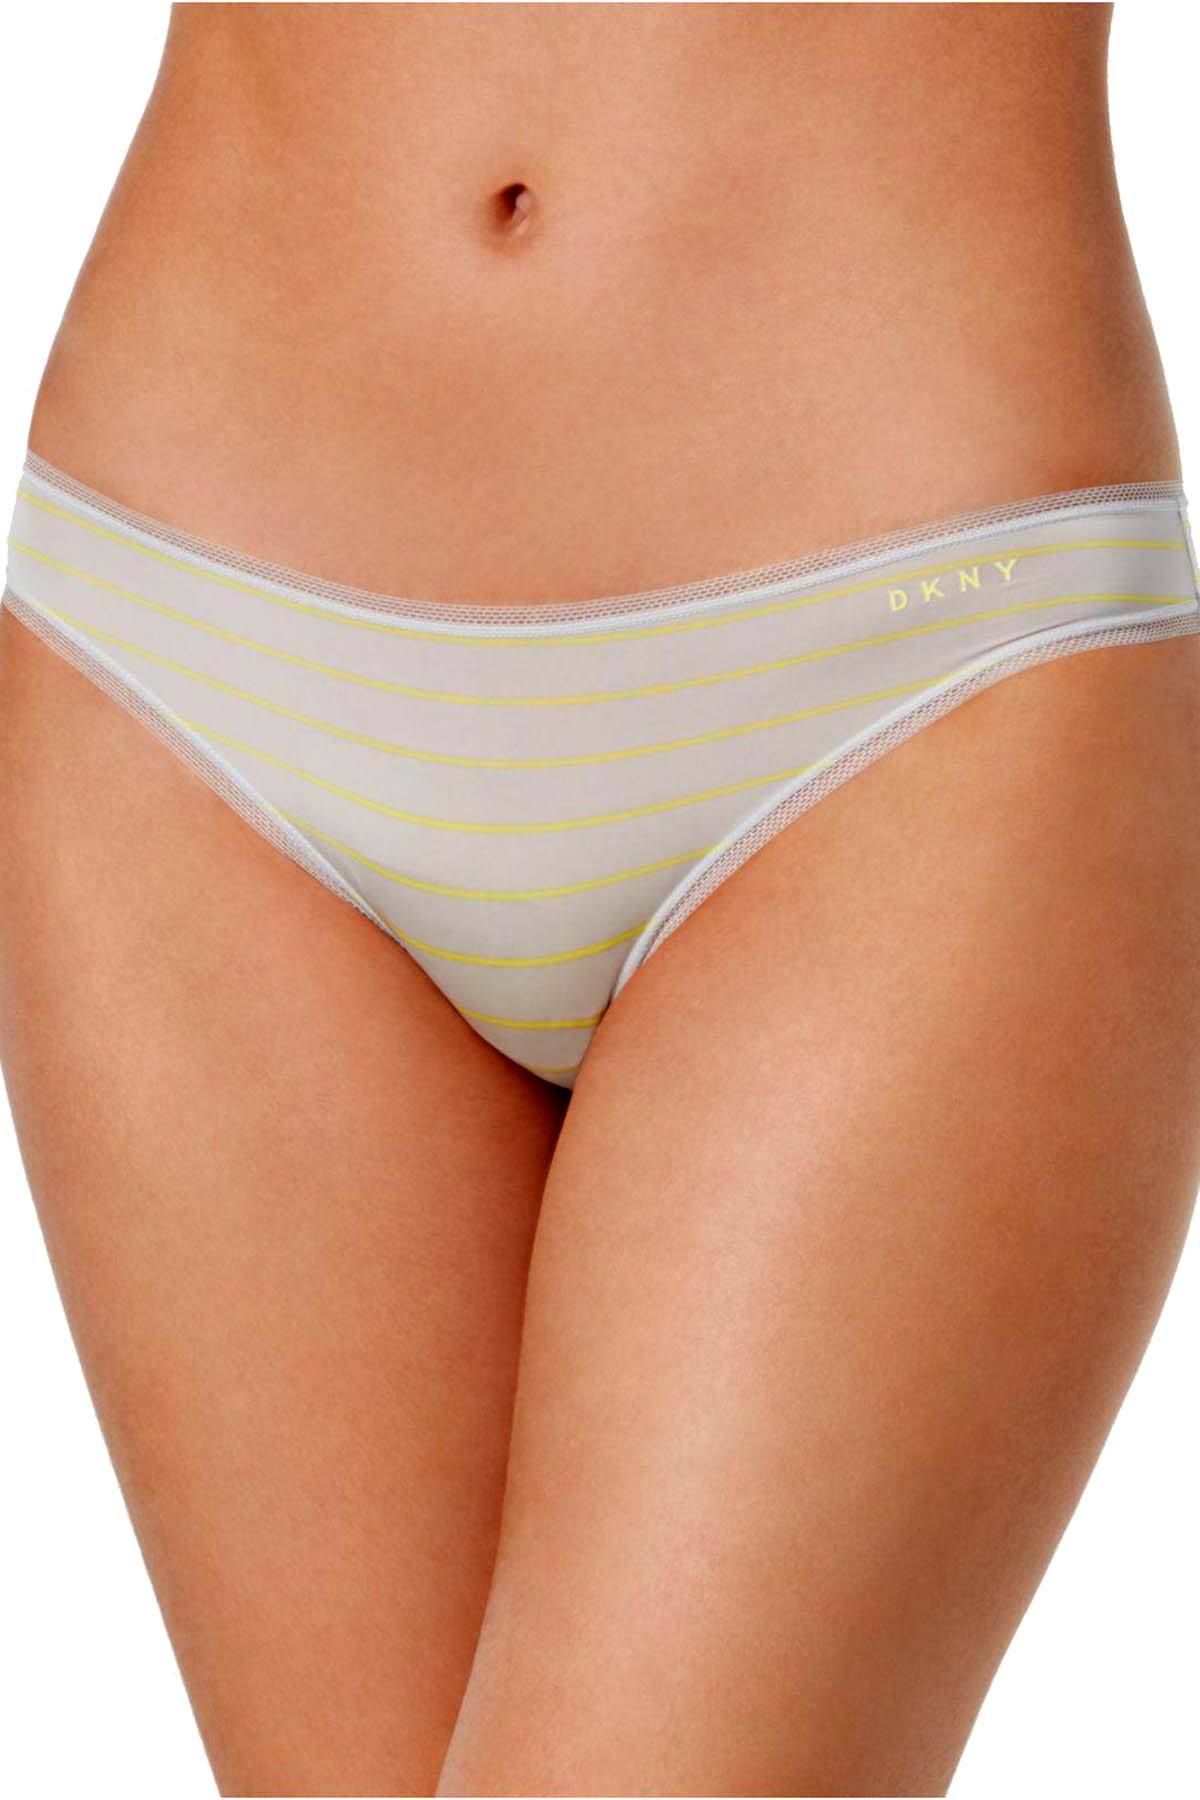 DKNY Grey and Yellow Striped Litewear Low-Rise Mesh-Trim Bikini Brief